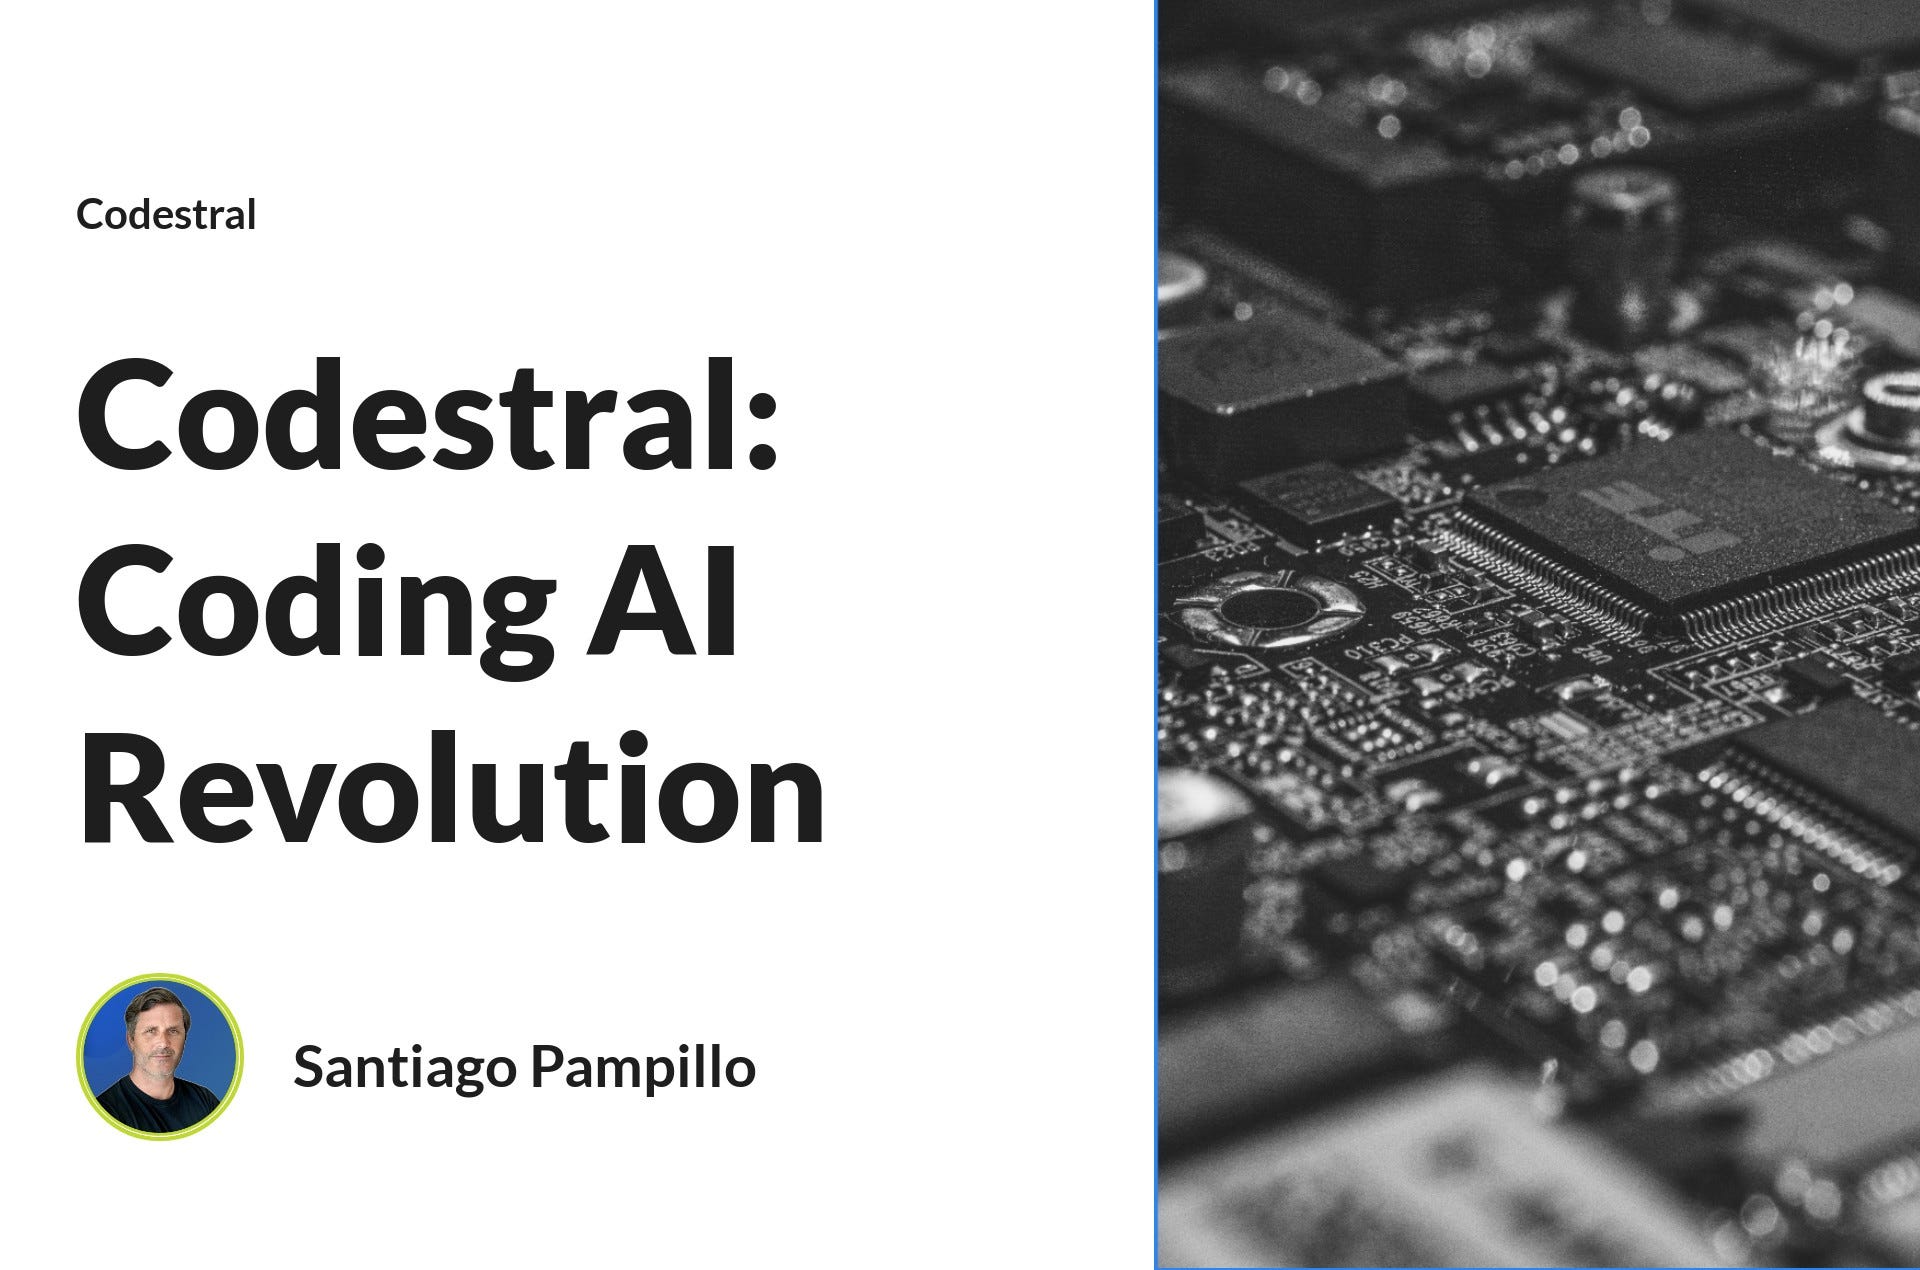 Codestral: Coding AI Revolution